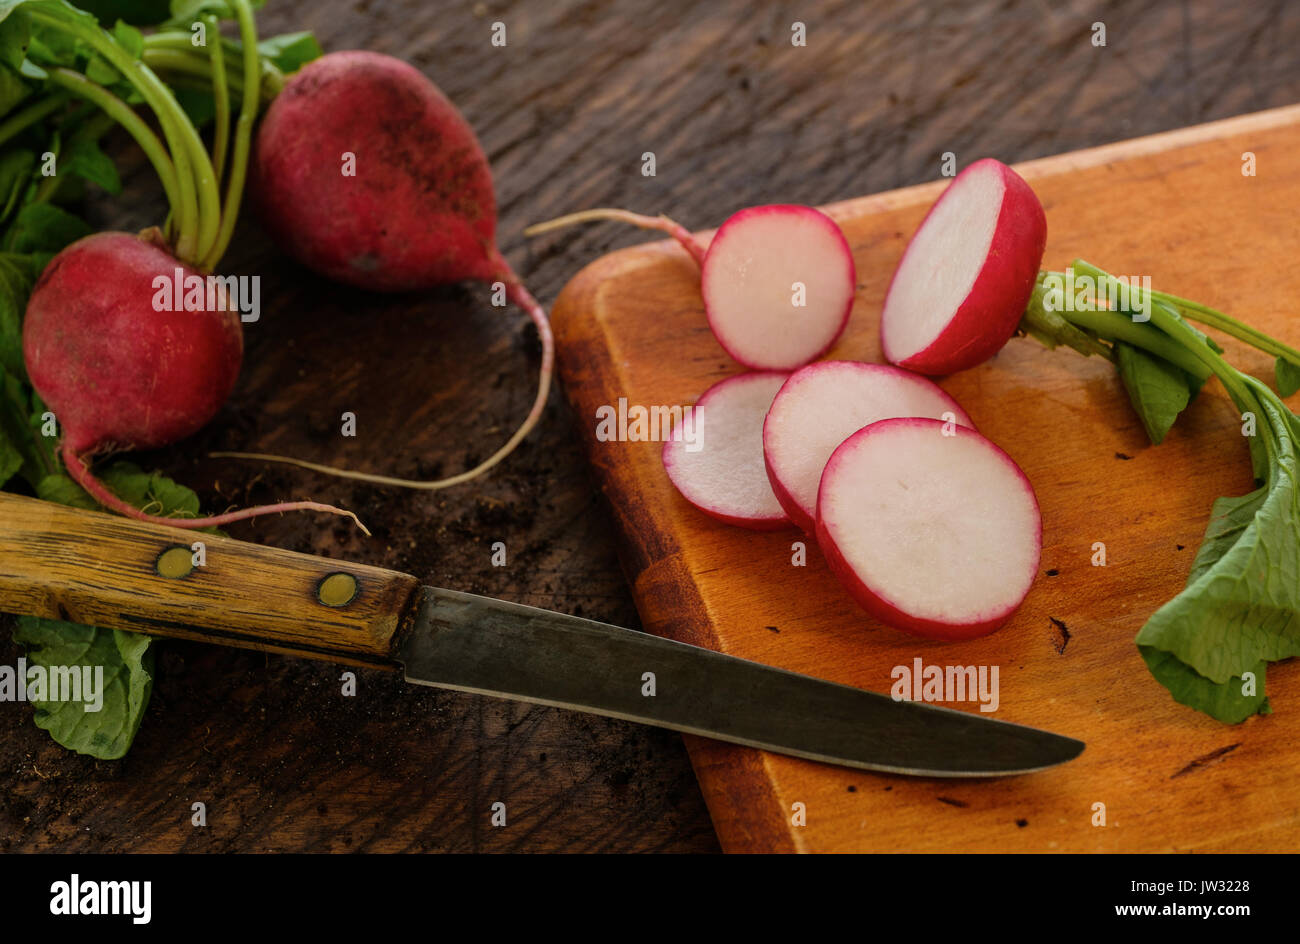 https://c8.alamy.com/comp/JW3228/slices-of-red-radish-and-knife-on-cutting-board-JW3228.jpg